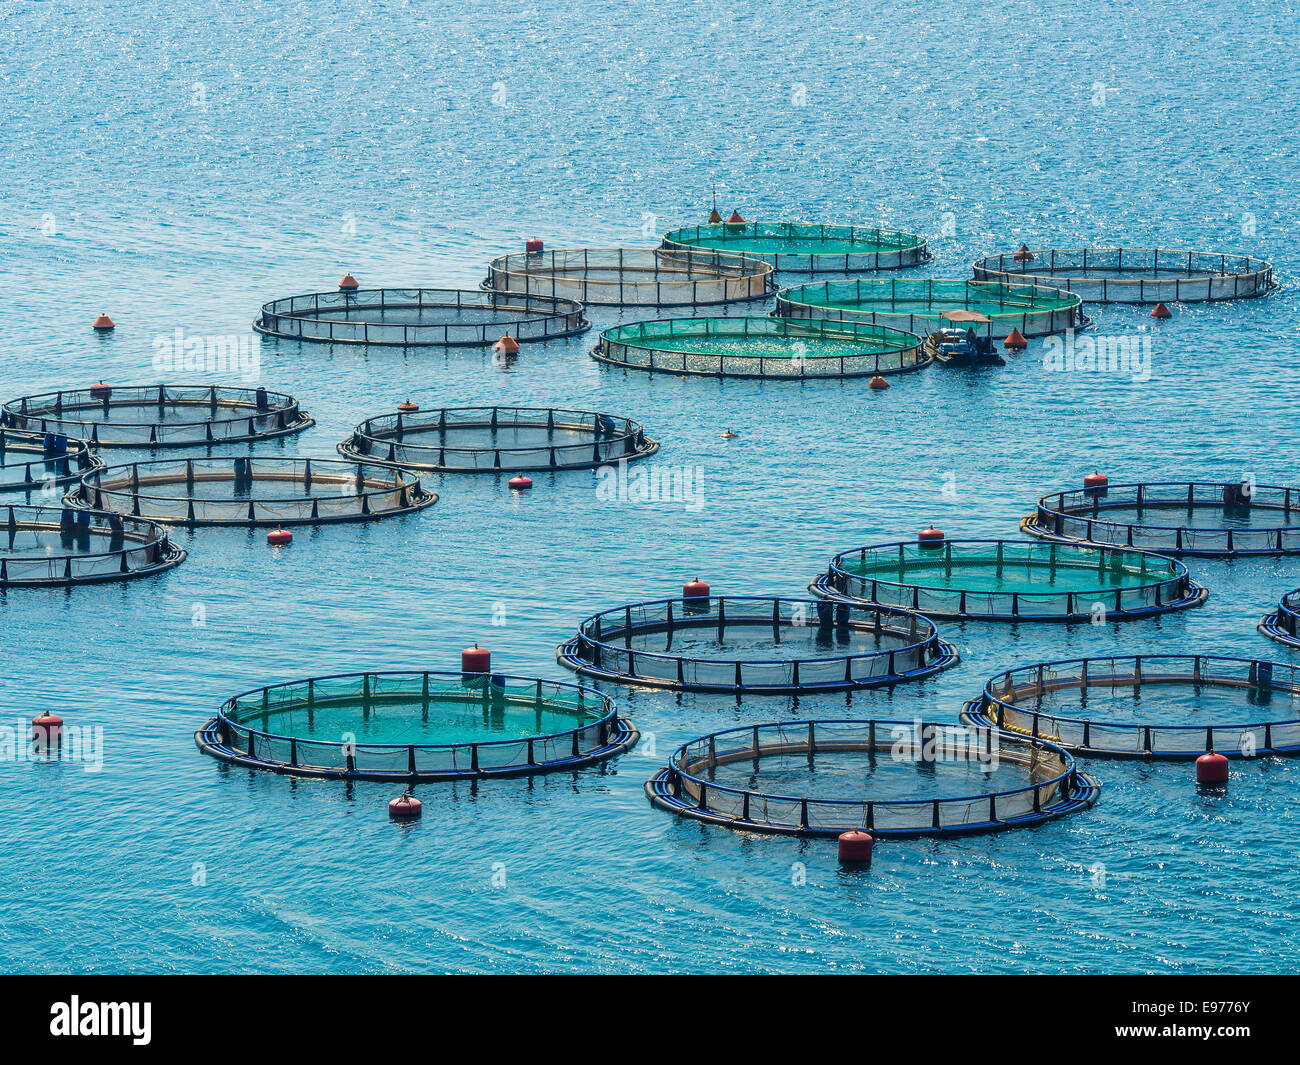 Fish farming off the coast of Greece Stock Photo